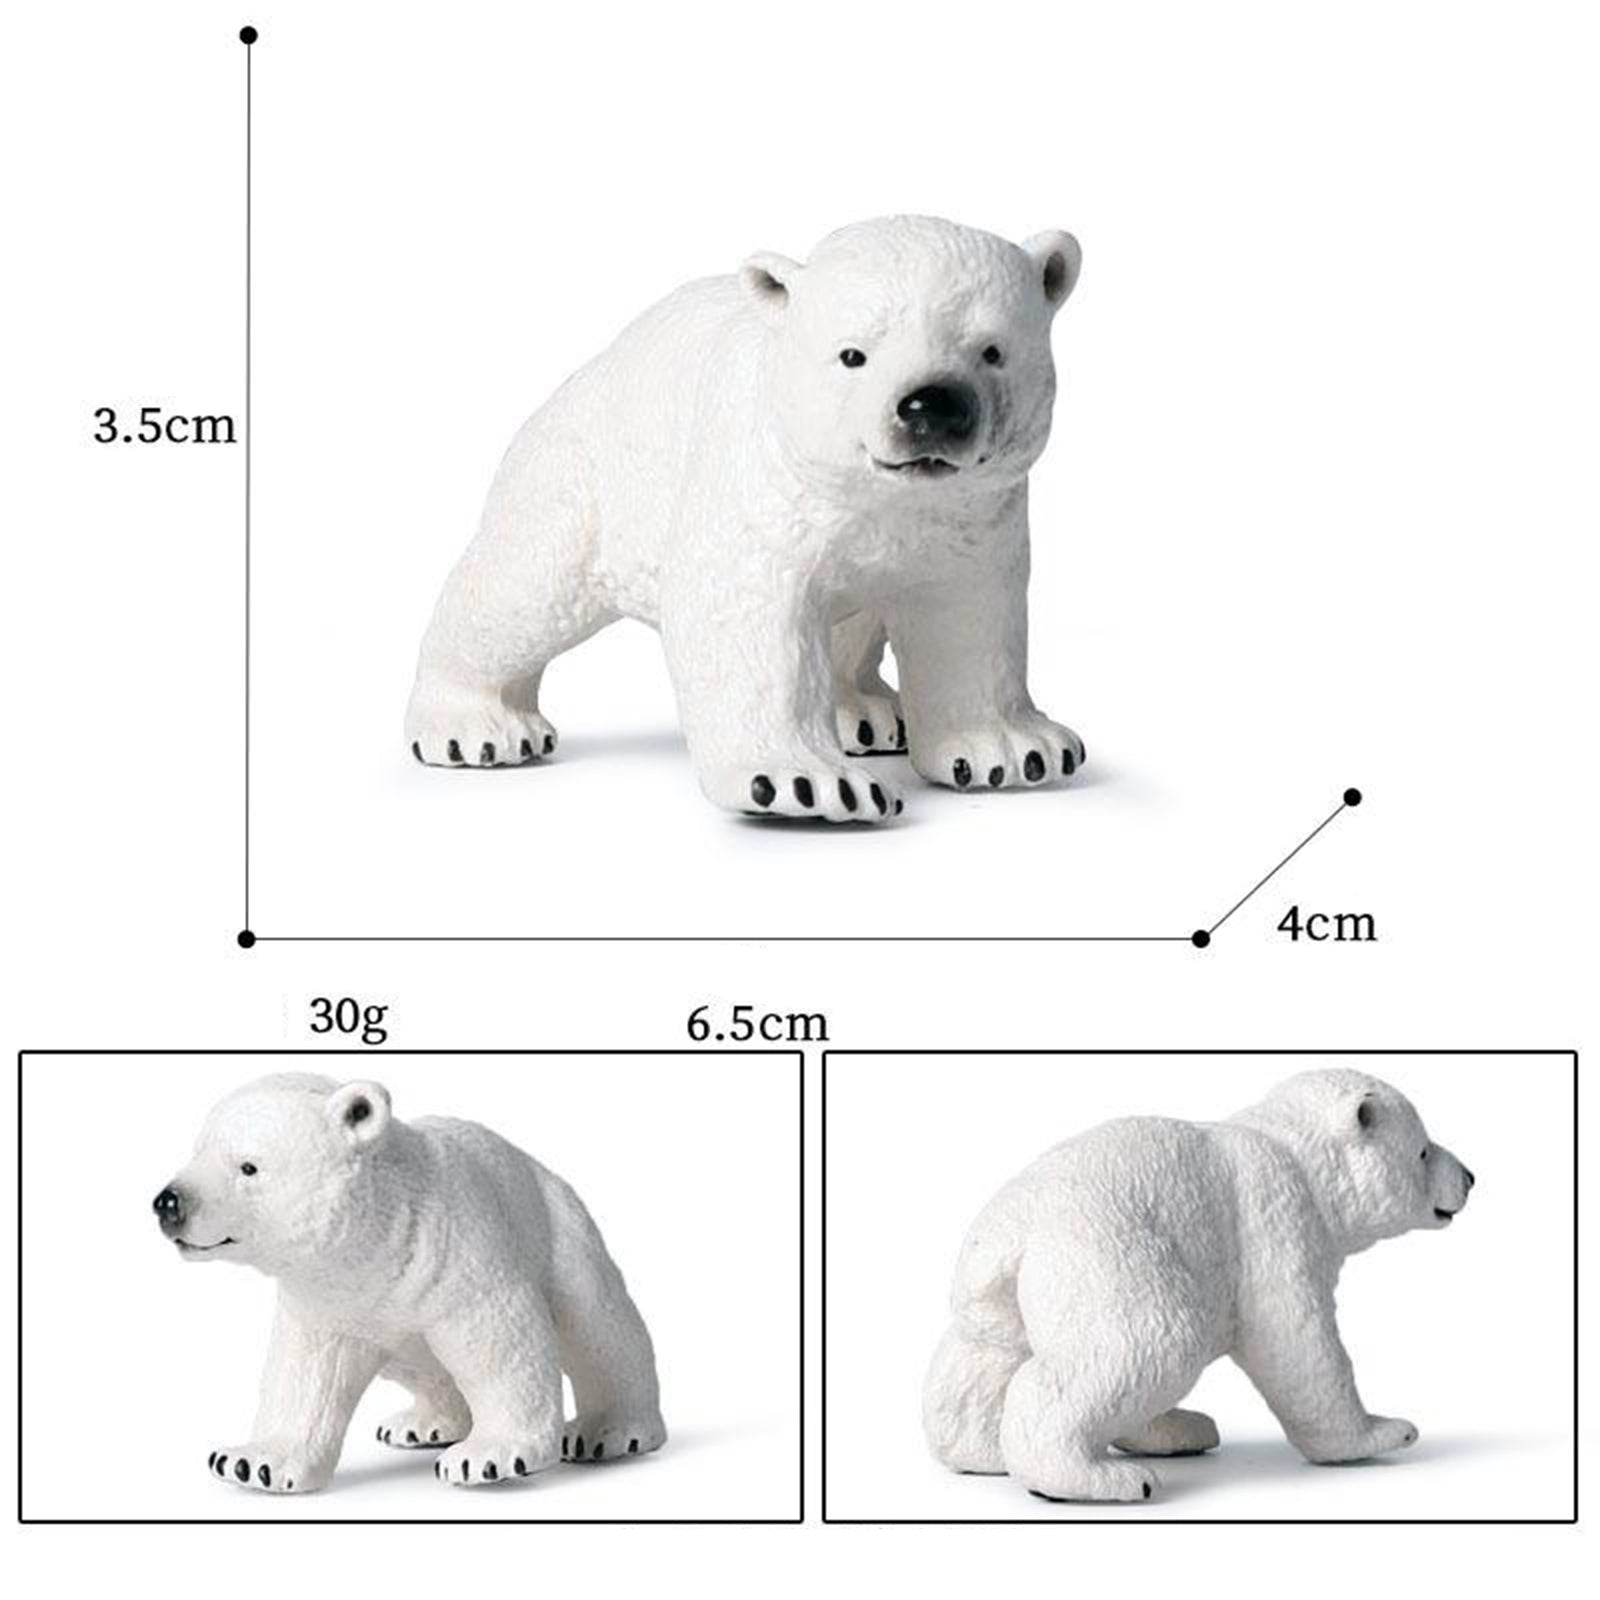 Lifelike Polar Animals Figure Wildlife Animal Kids Educational Learning Toy